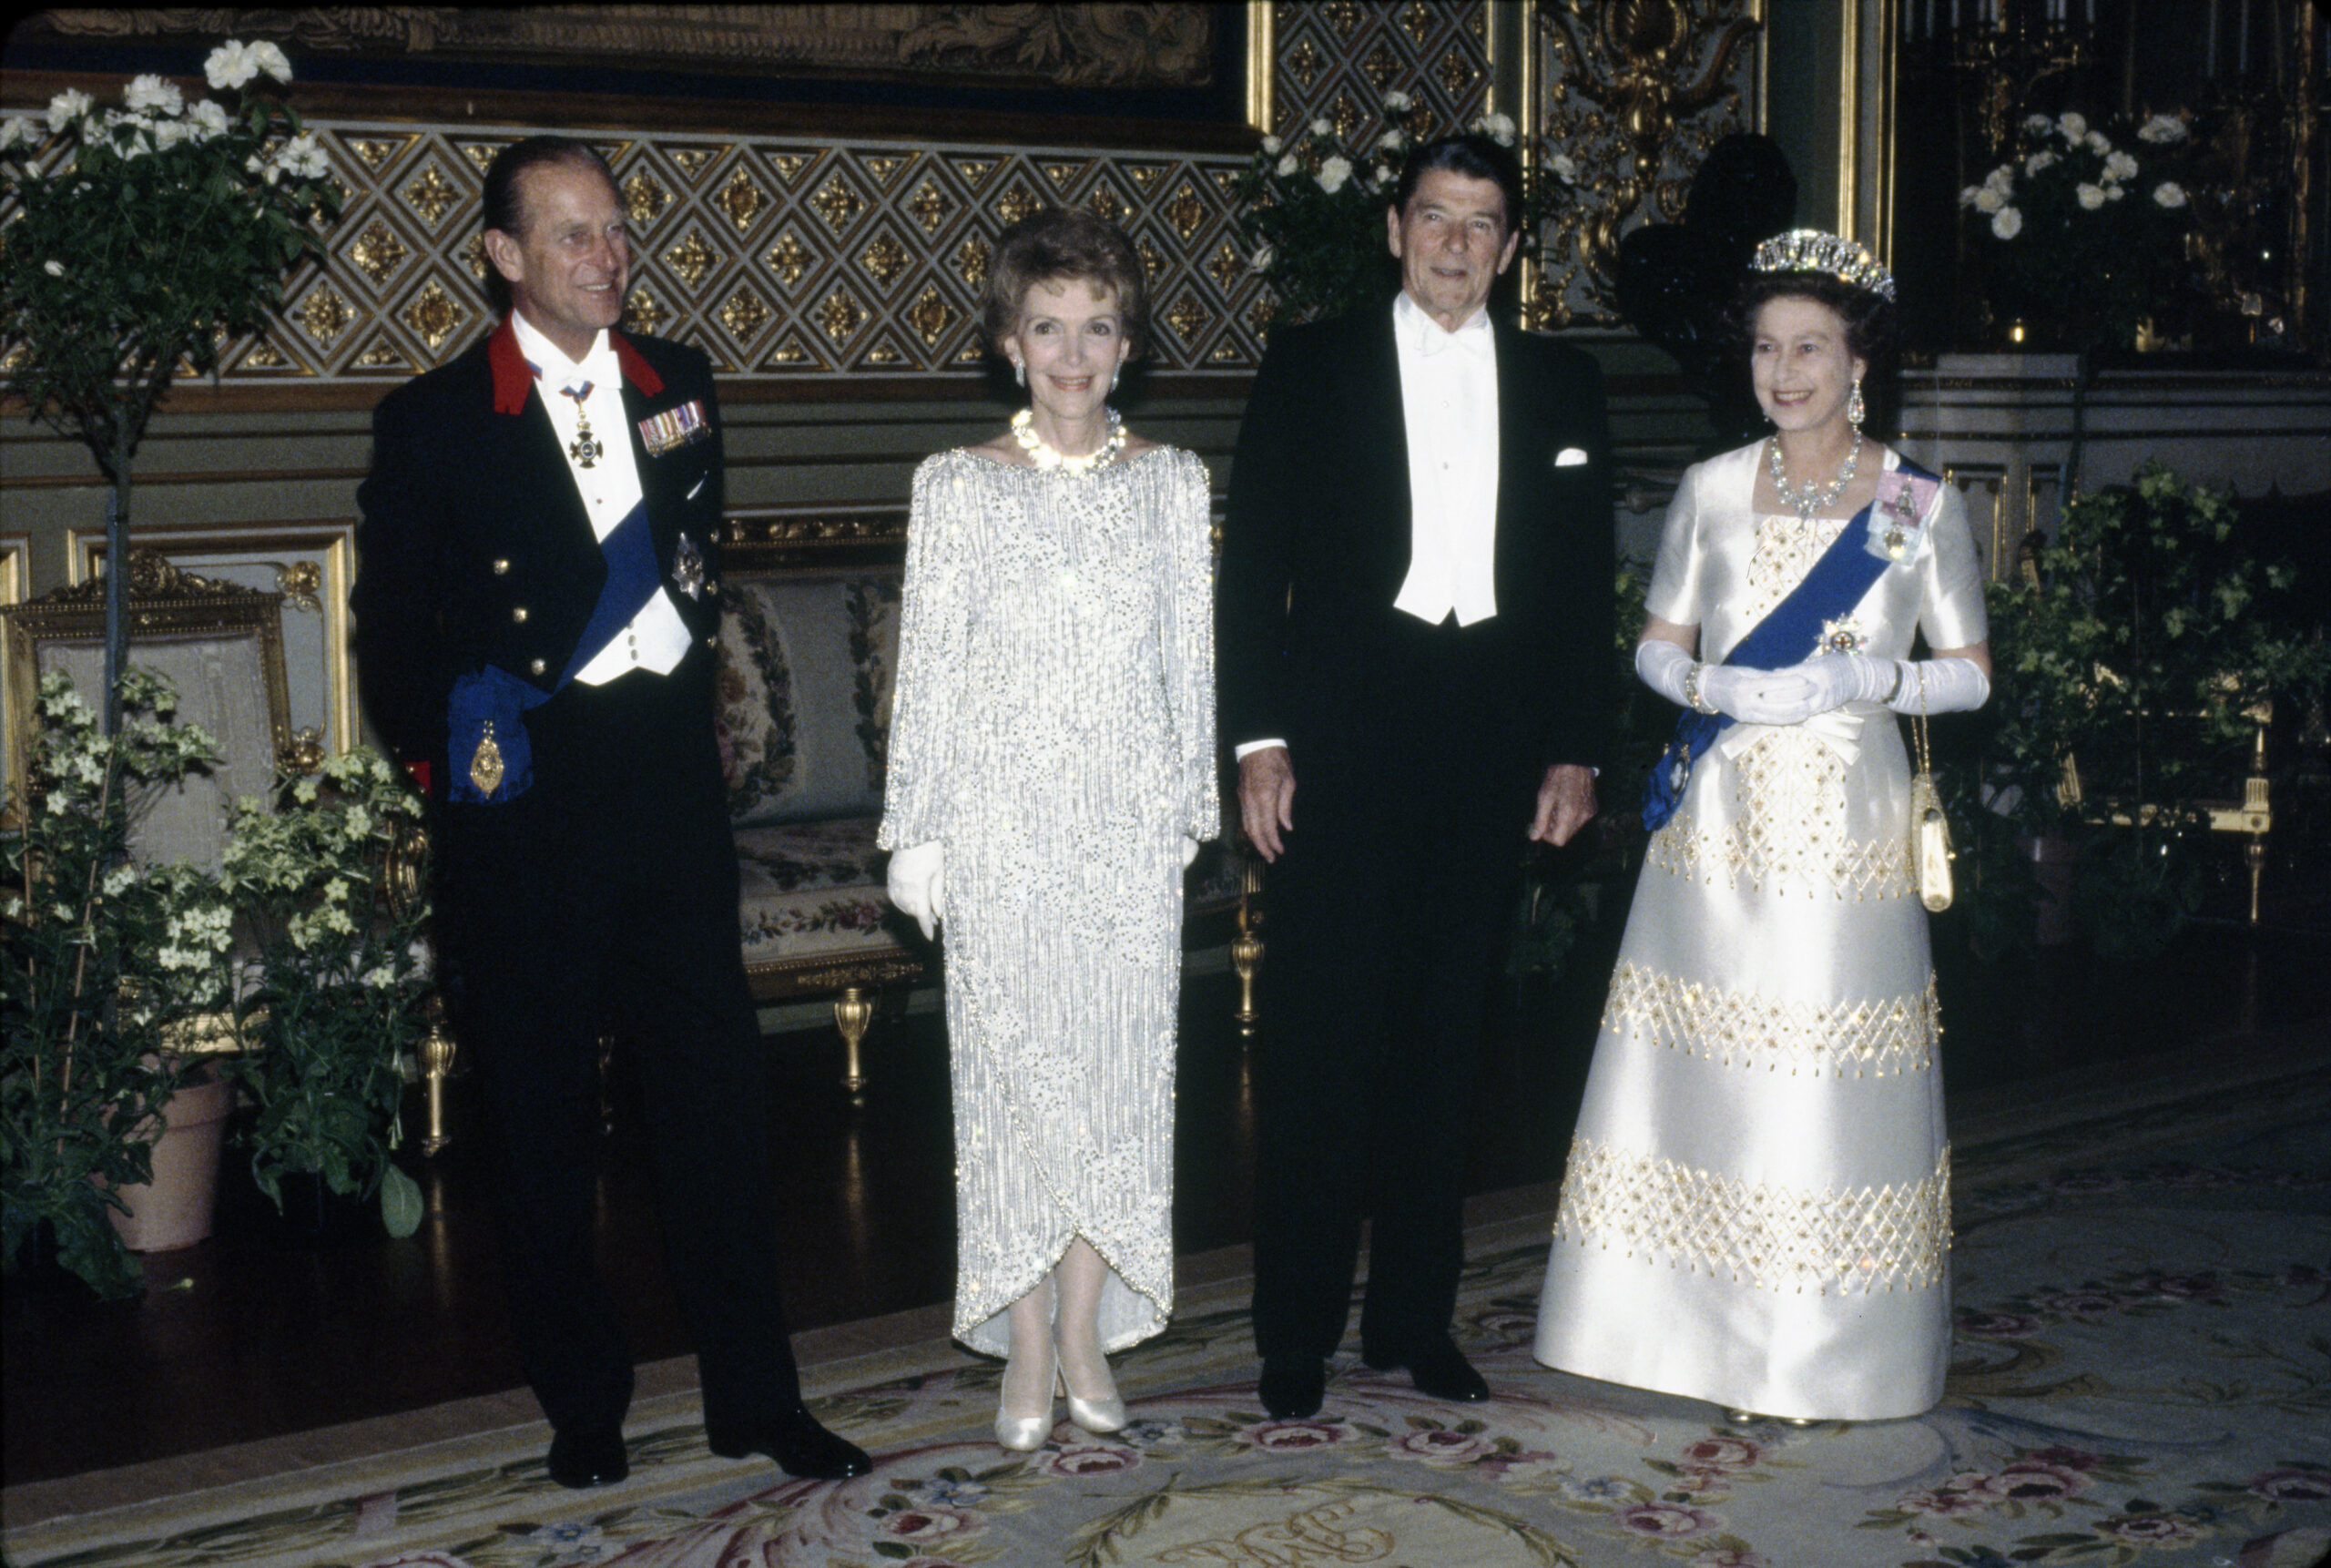 President Ronald Reagan Queen Elizabeth Ii Nancy Reagan and Prince Philip at Windsor Castle in Windsor United Kingdom - NAI 75856889